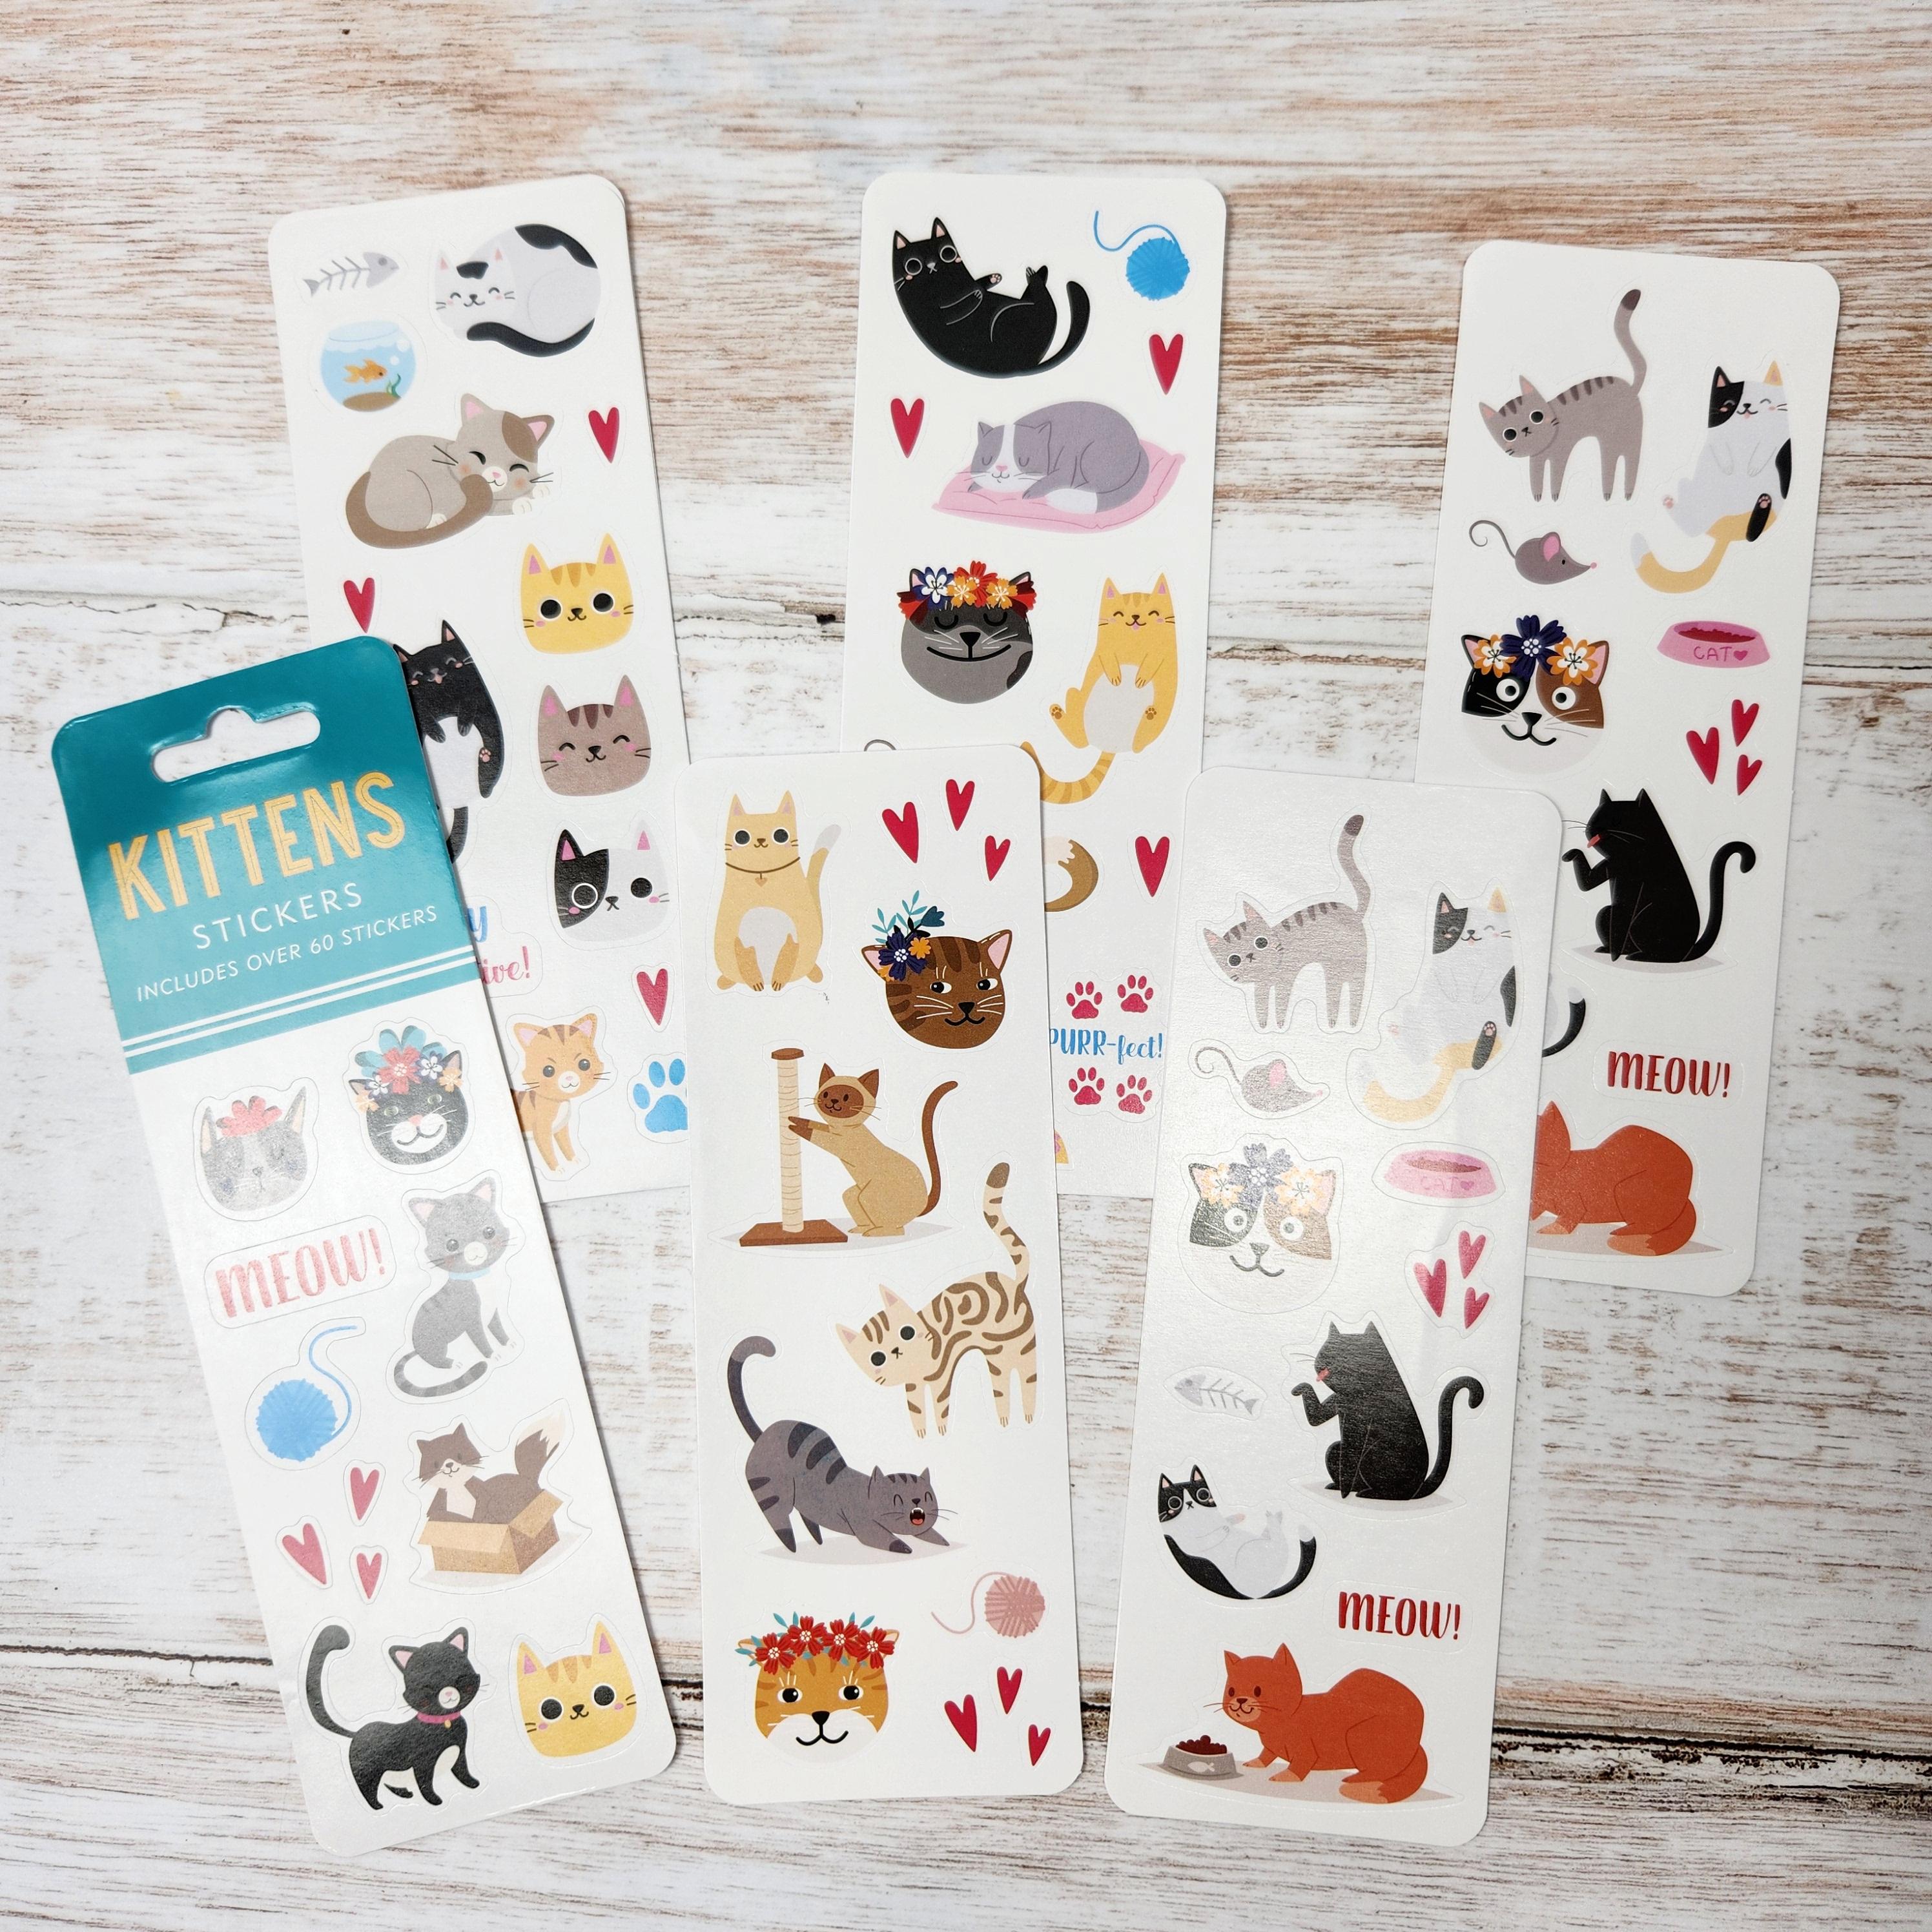 Peter Pauper Press Kittens Sticker Set 6 sheets with cute cats and kittens - Paper Kooka Australia